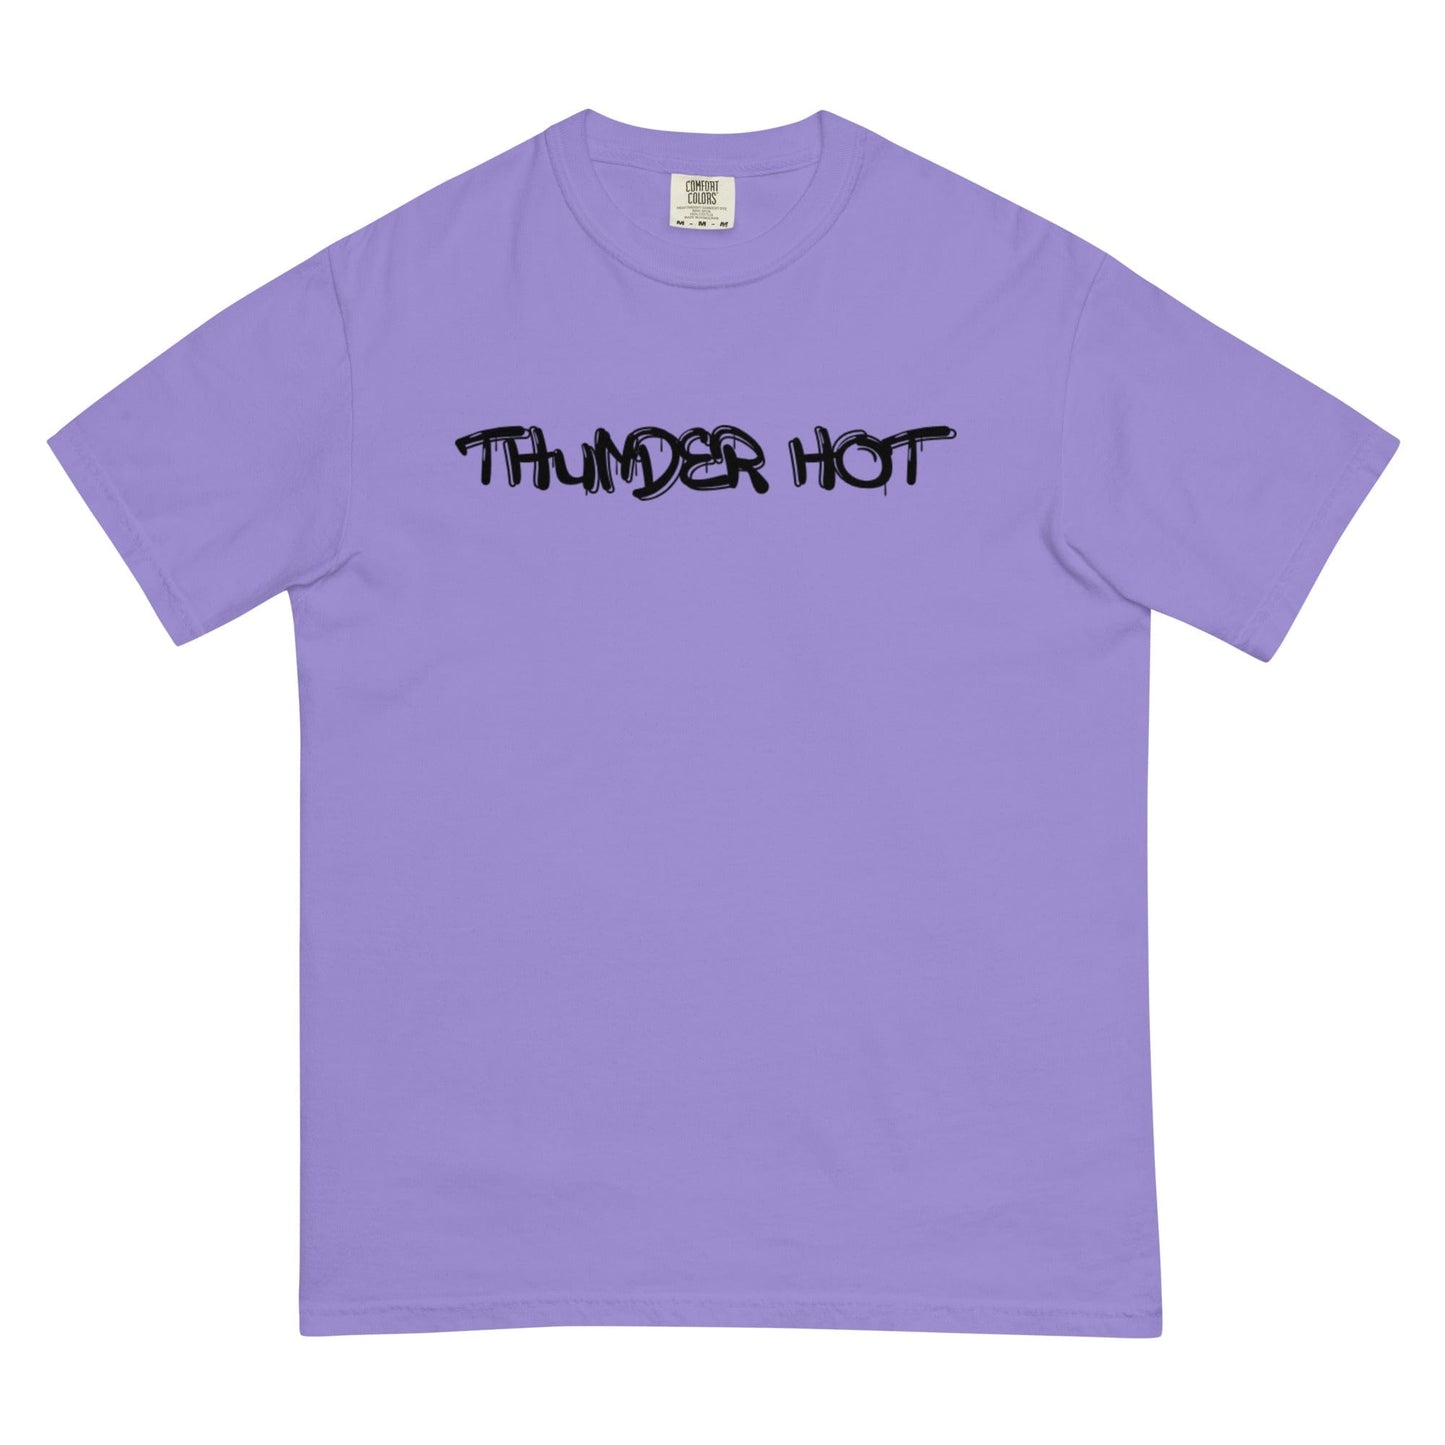 Thunder Hot Premium Graphic Tees Men and Women - Cool Shirts Design T-Shirts S - 4XL